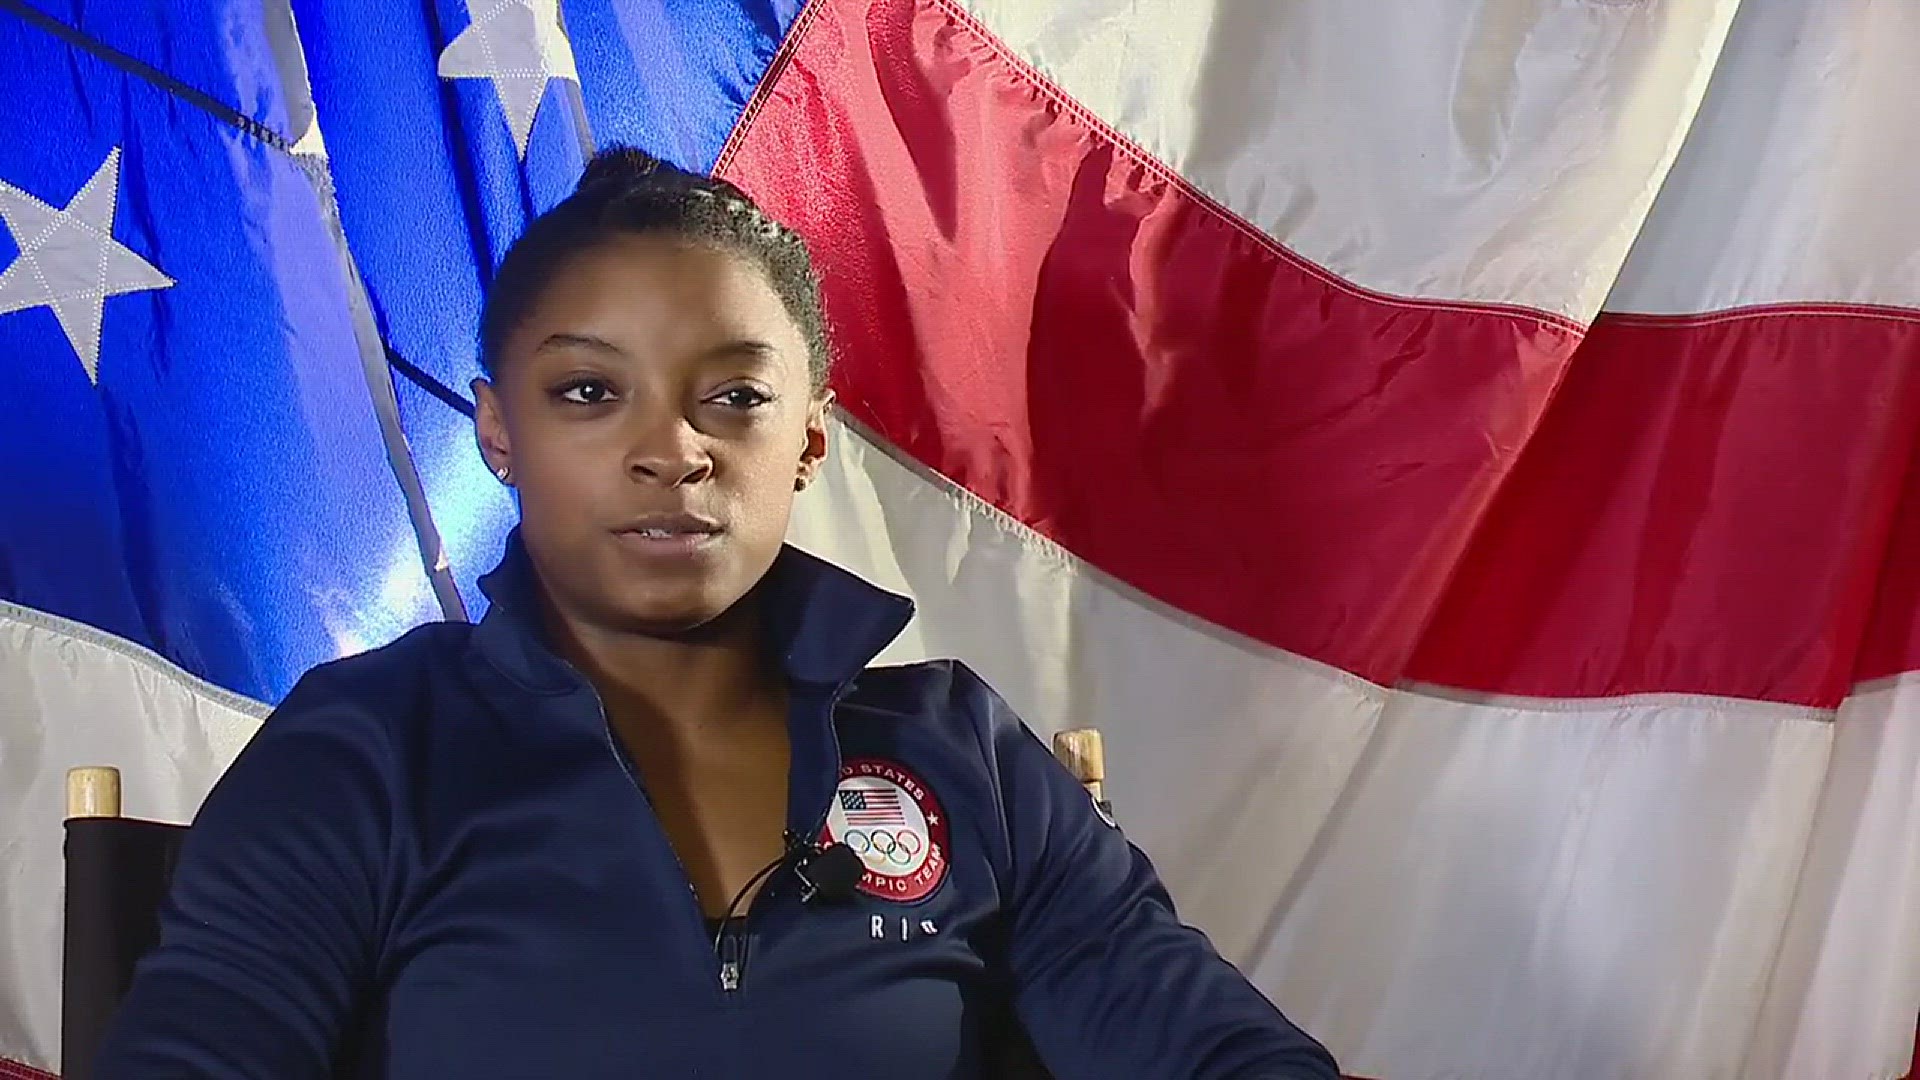 An interview with USA gymnastics star Simone Biles ahead of the 2016 Rio Olympics